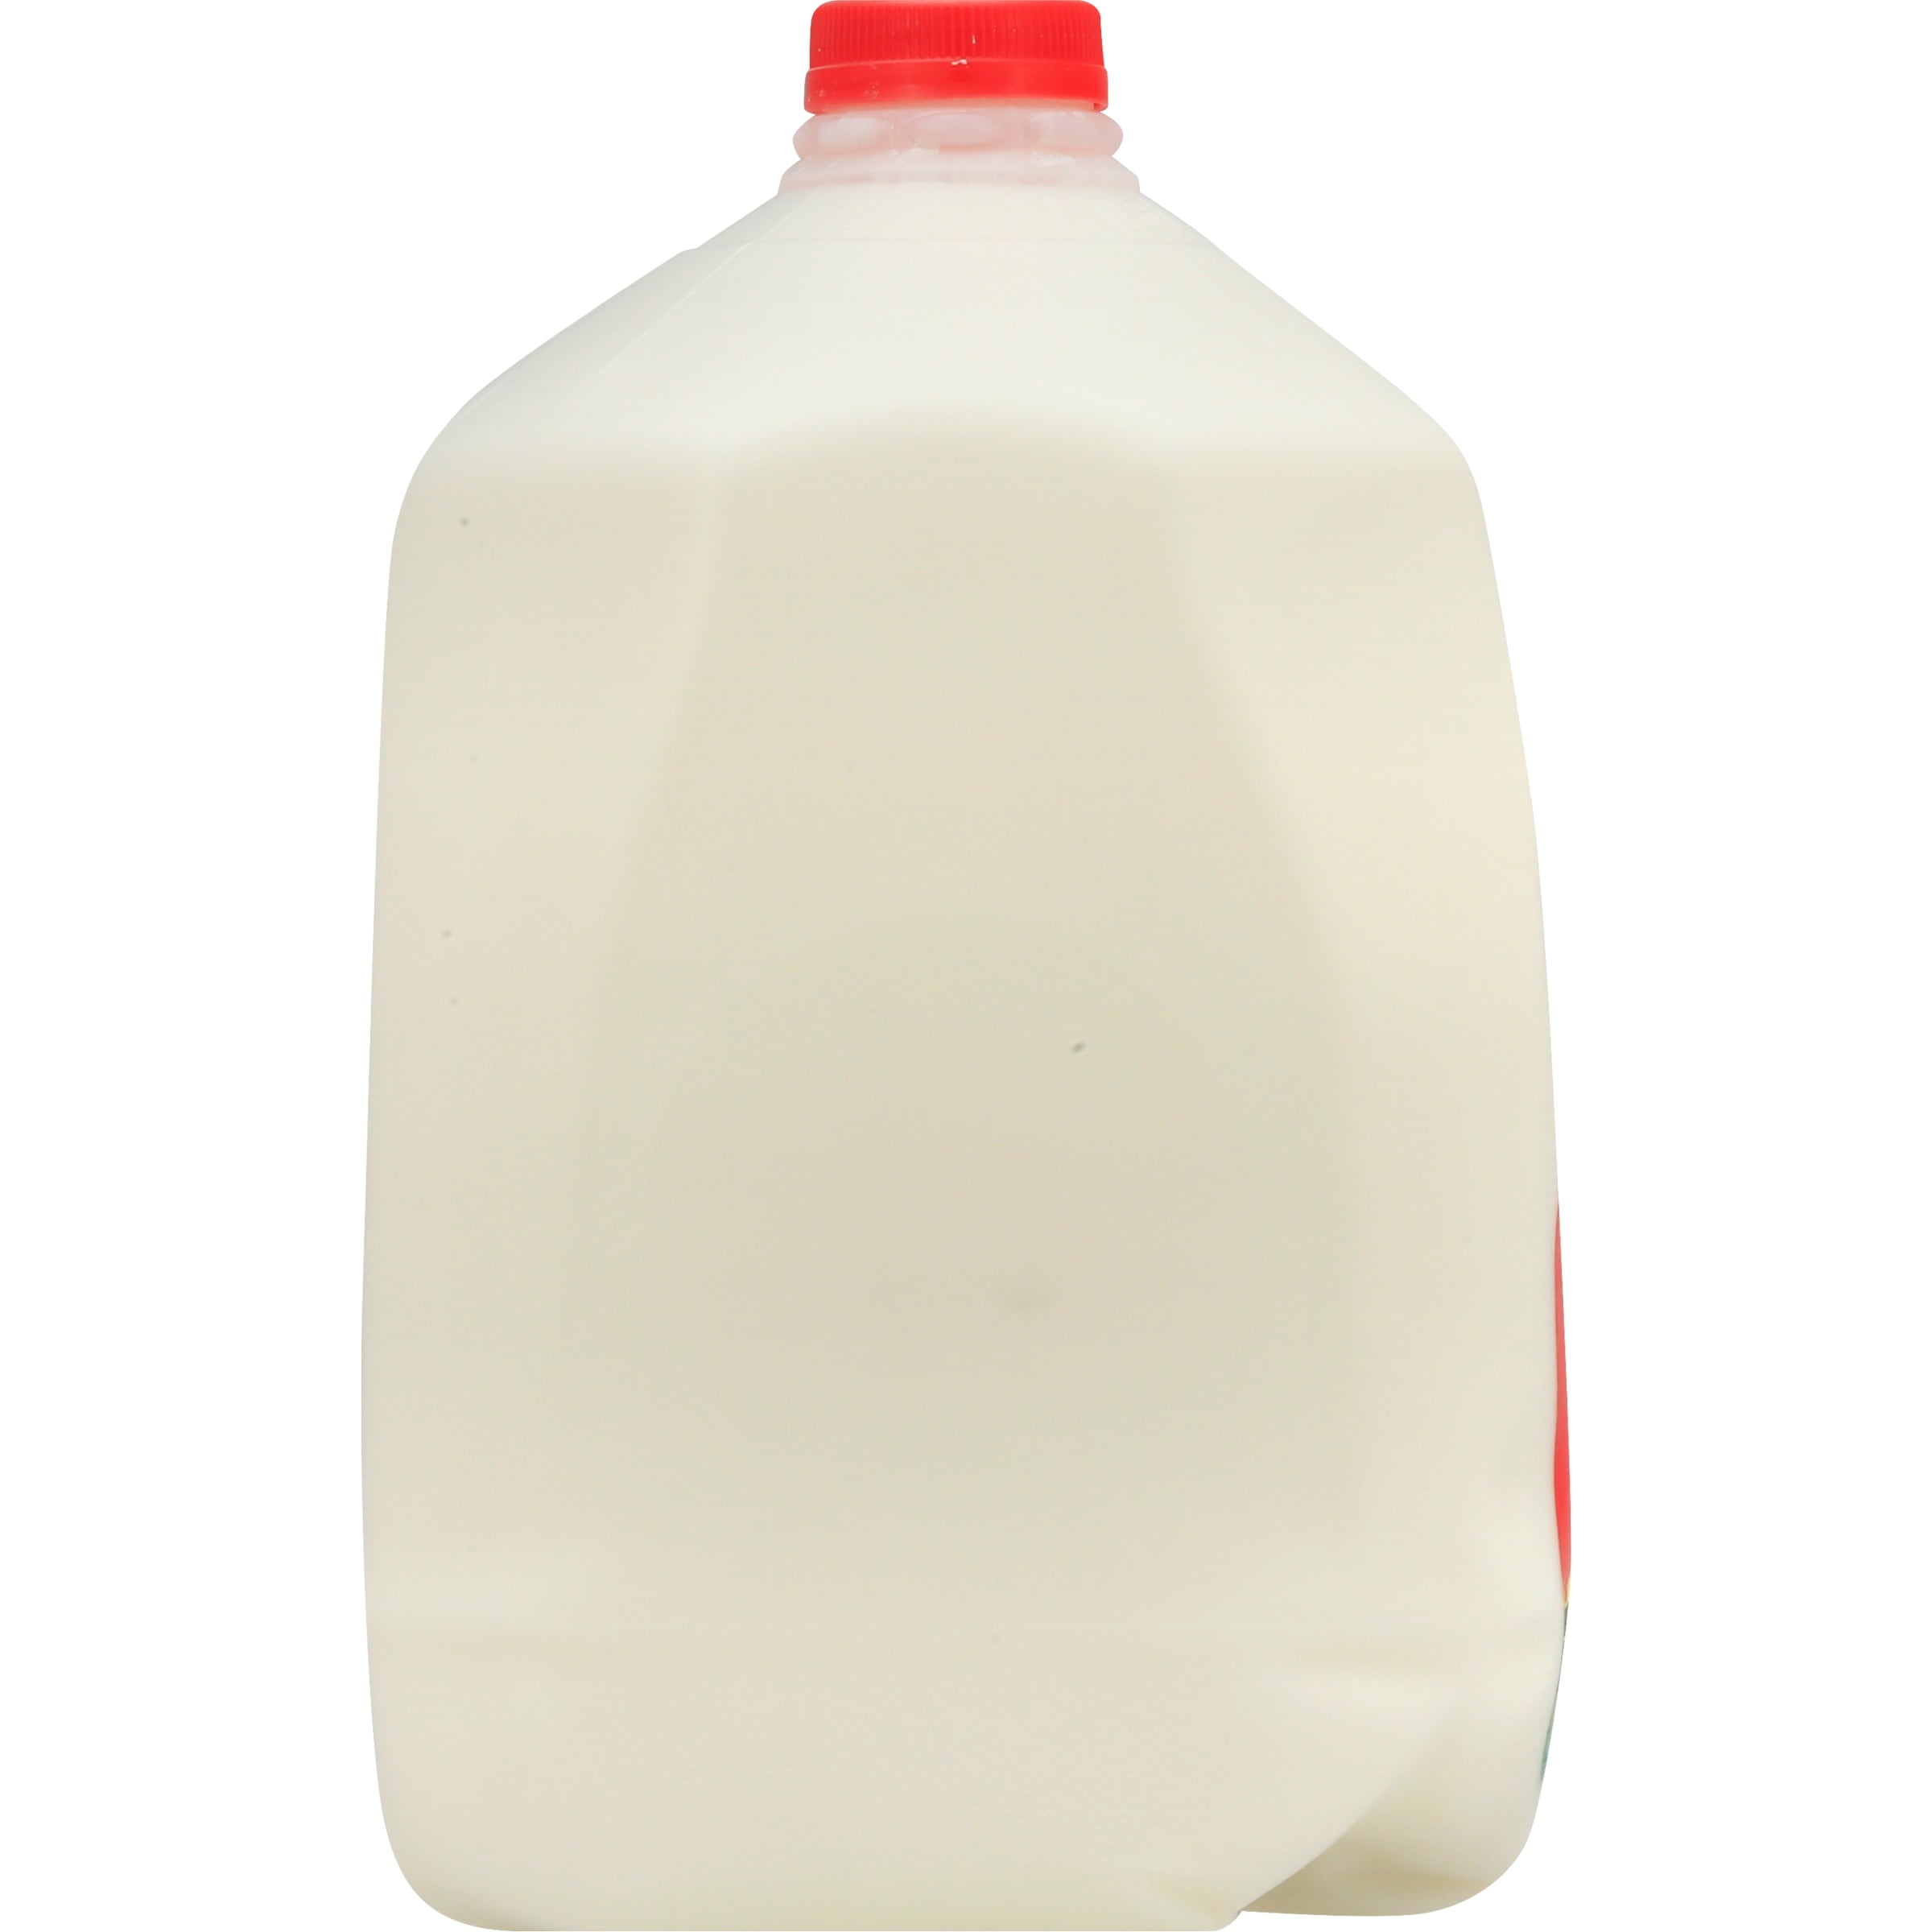 Whole Milk Plastic Half Gallon - Tuscan® Dairy Farms